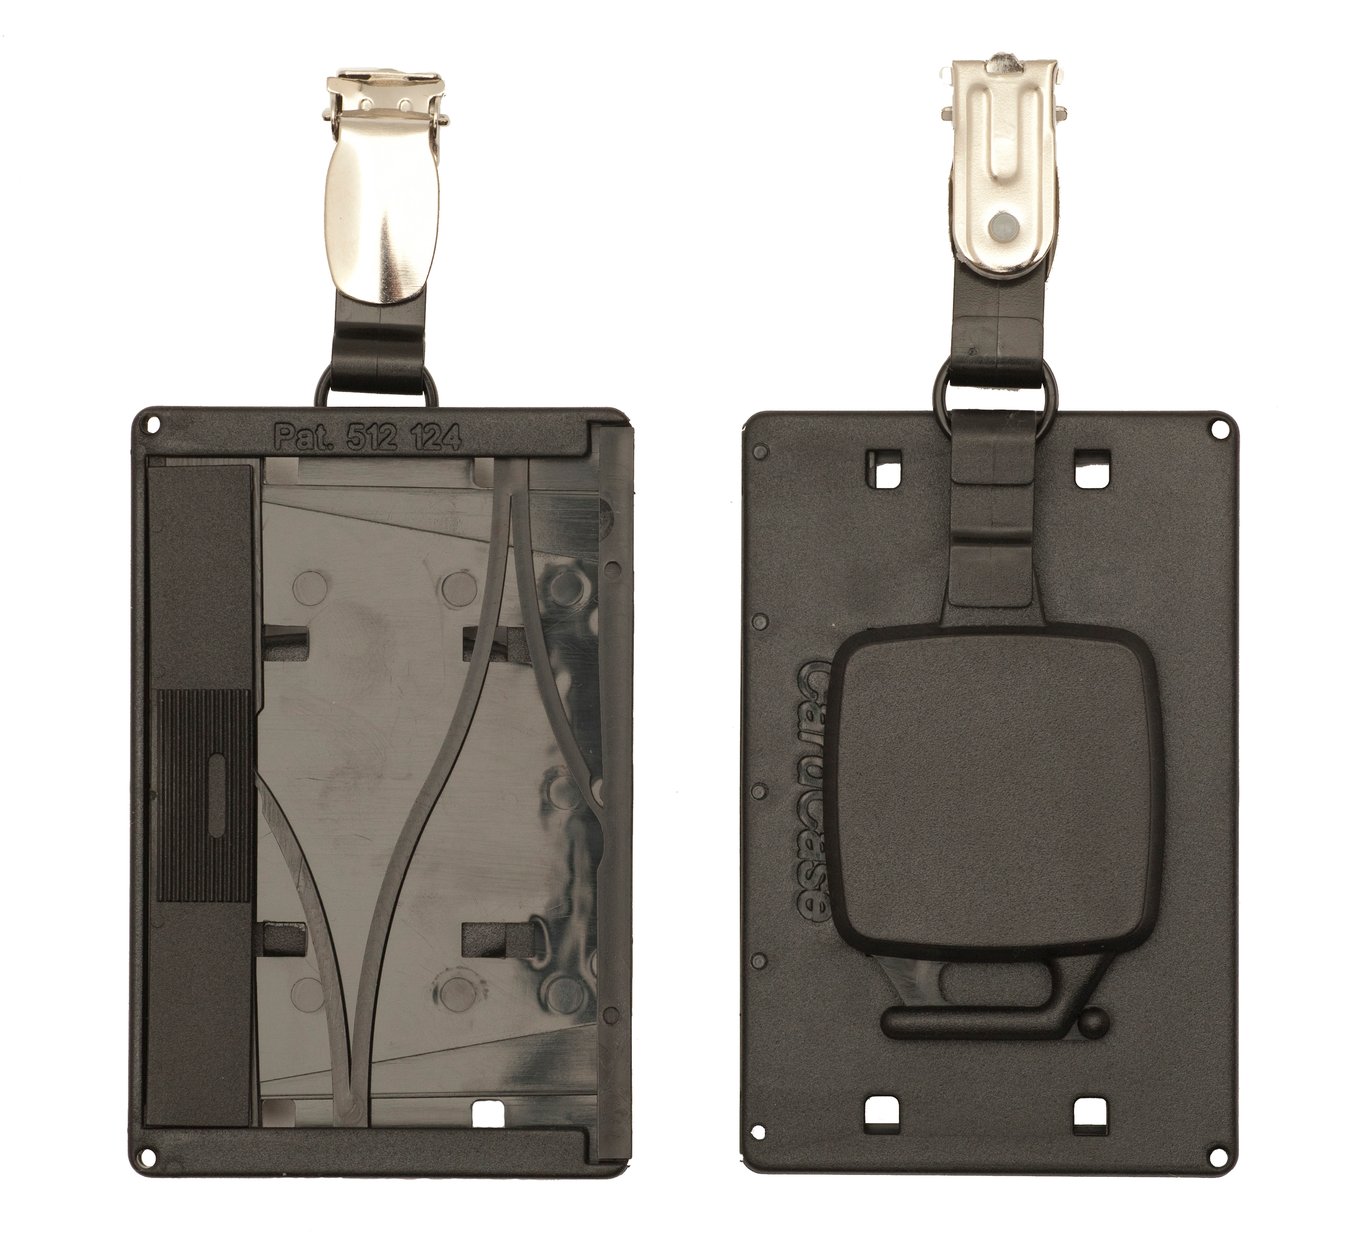 Korthållare Cardkeep Cardcase med yoyo & strip svart 132x58mm 15040031